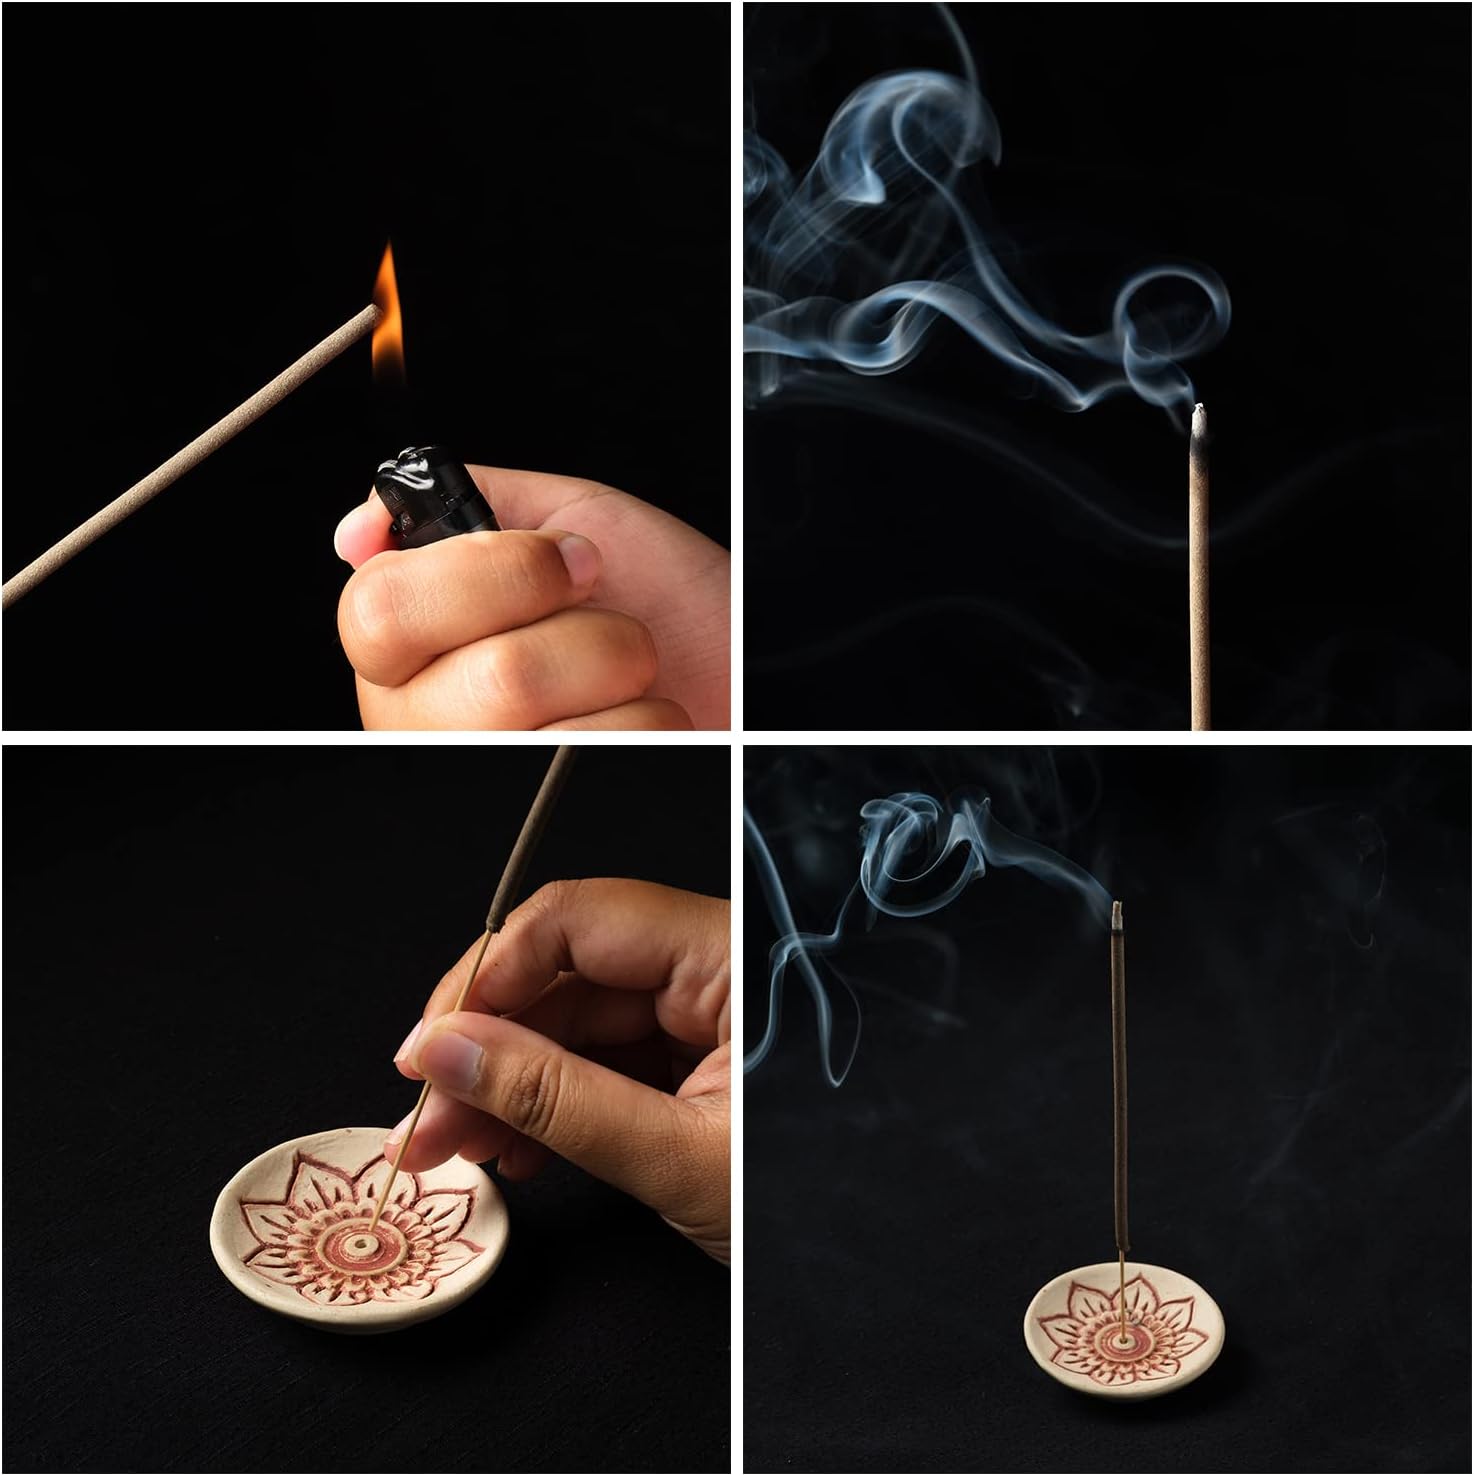 Jembrana Incense Sticks Mix 6 Scents (144 Sticks Total), 24 Sticks Each of Sandalwood, Amber, Maha Triloka, Gardenia, Padma  Raja Harum, Sold by Bali Soap